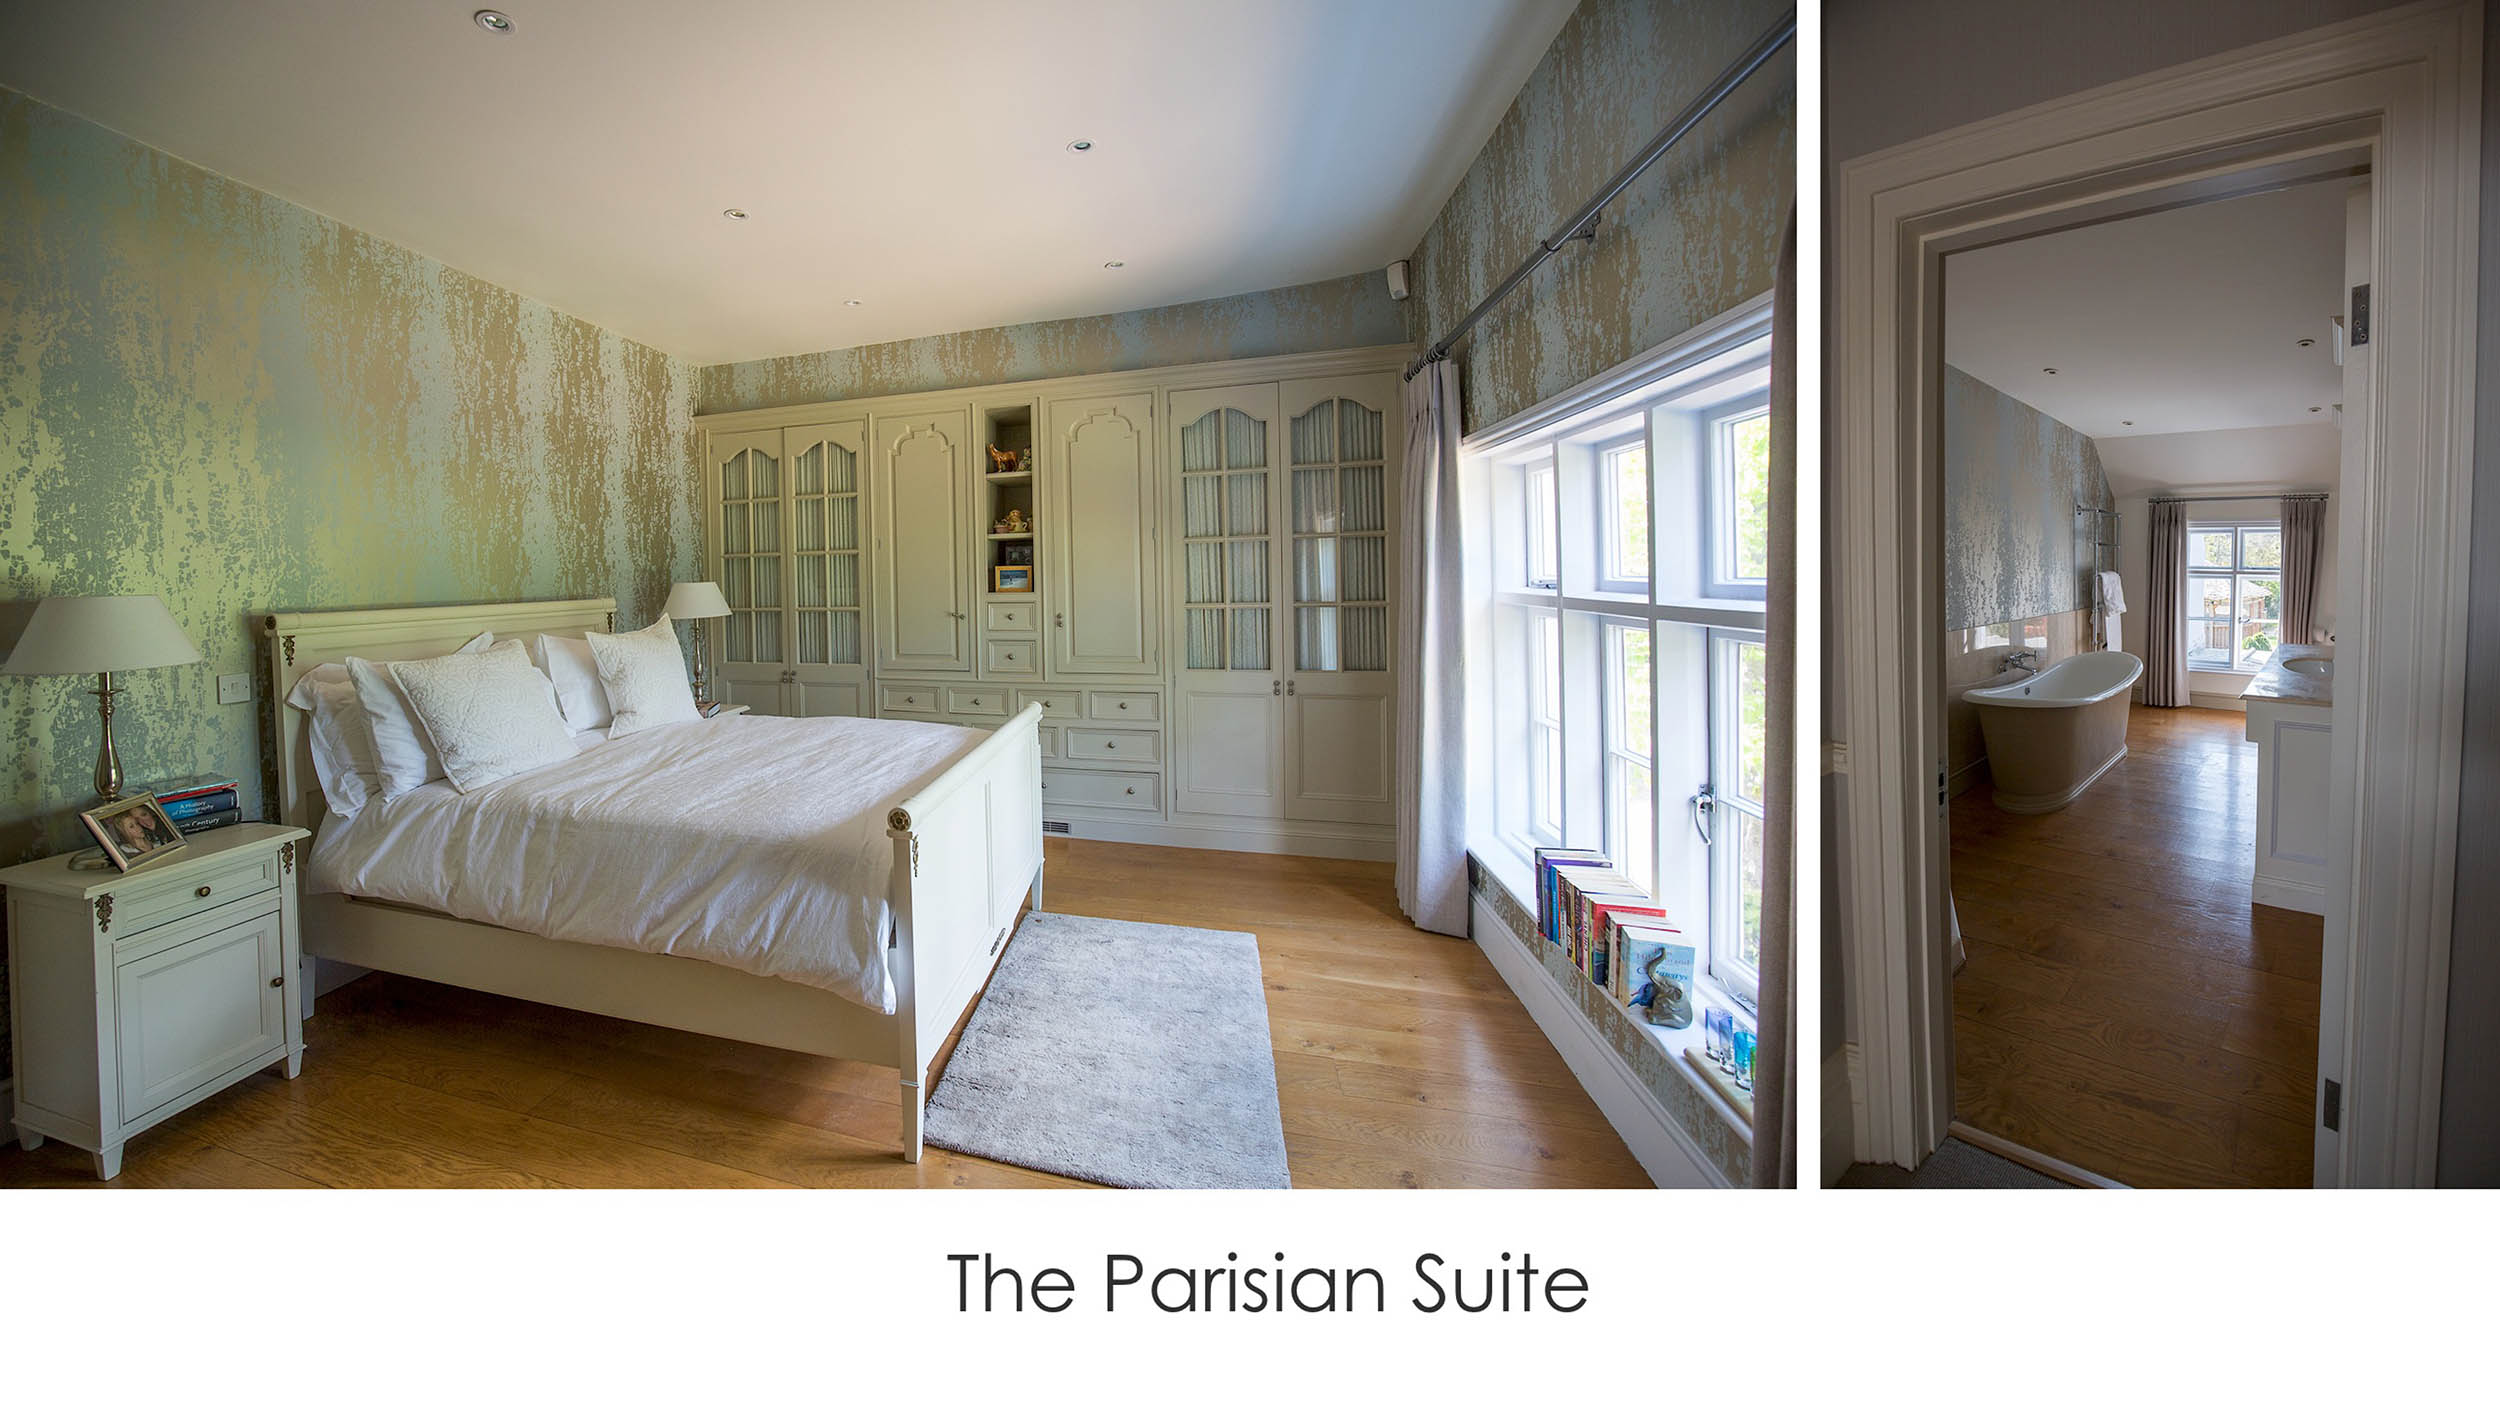 The Parisian Suite - Pennybridge House - Real Estate Development Projects by Gabriella Atkinson.